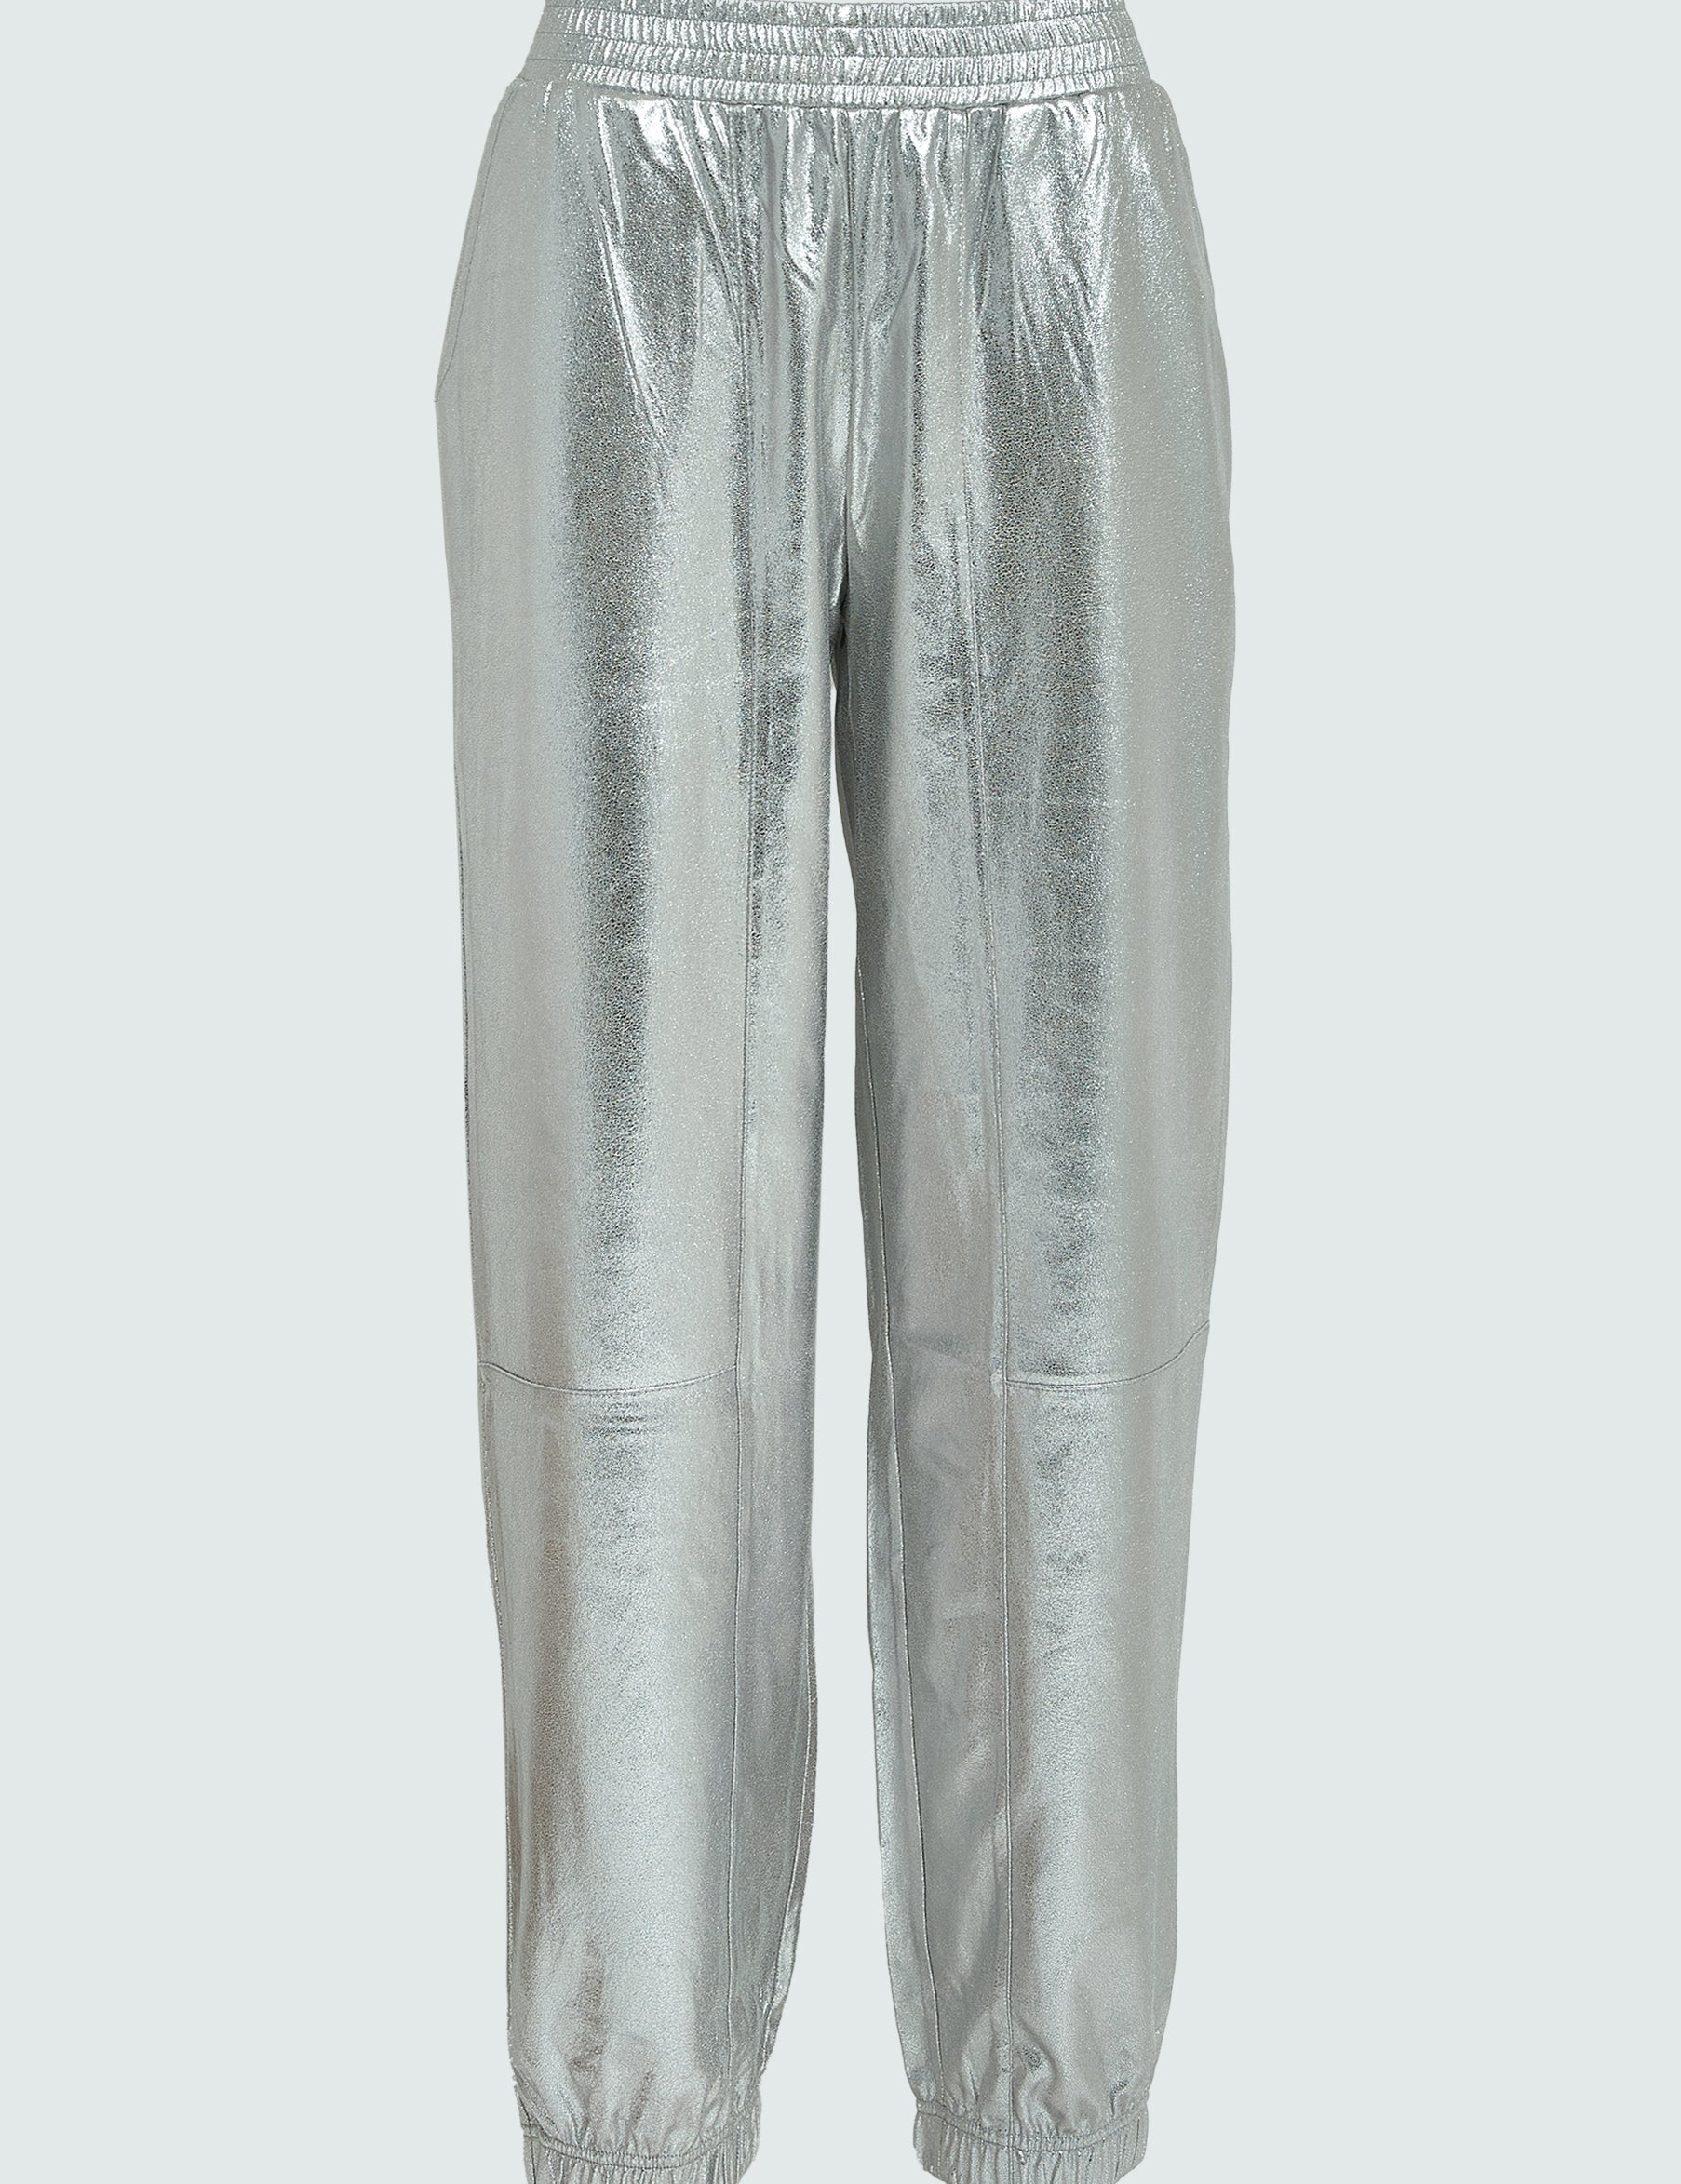 Peppercorn Ruthia Balloon Silver Pants Pant 9811 Silver